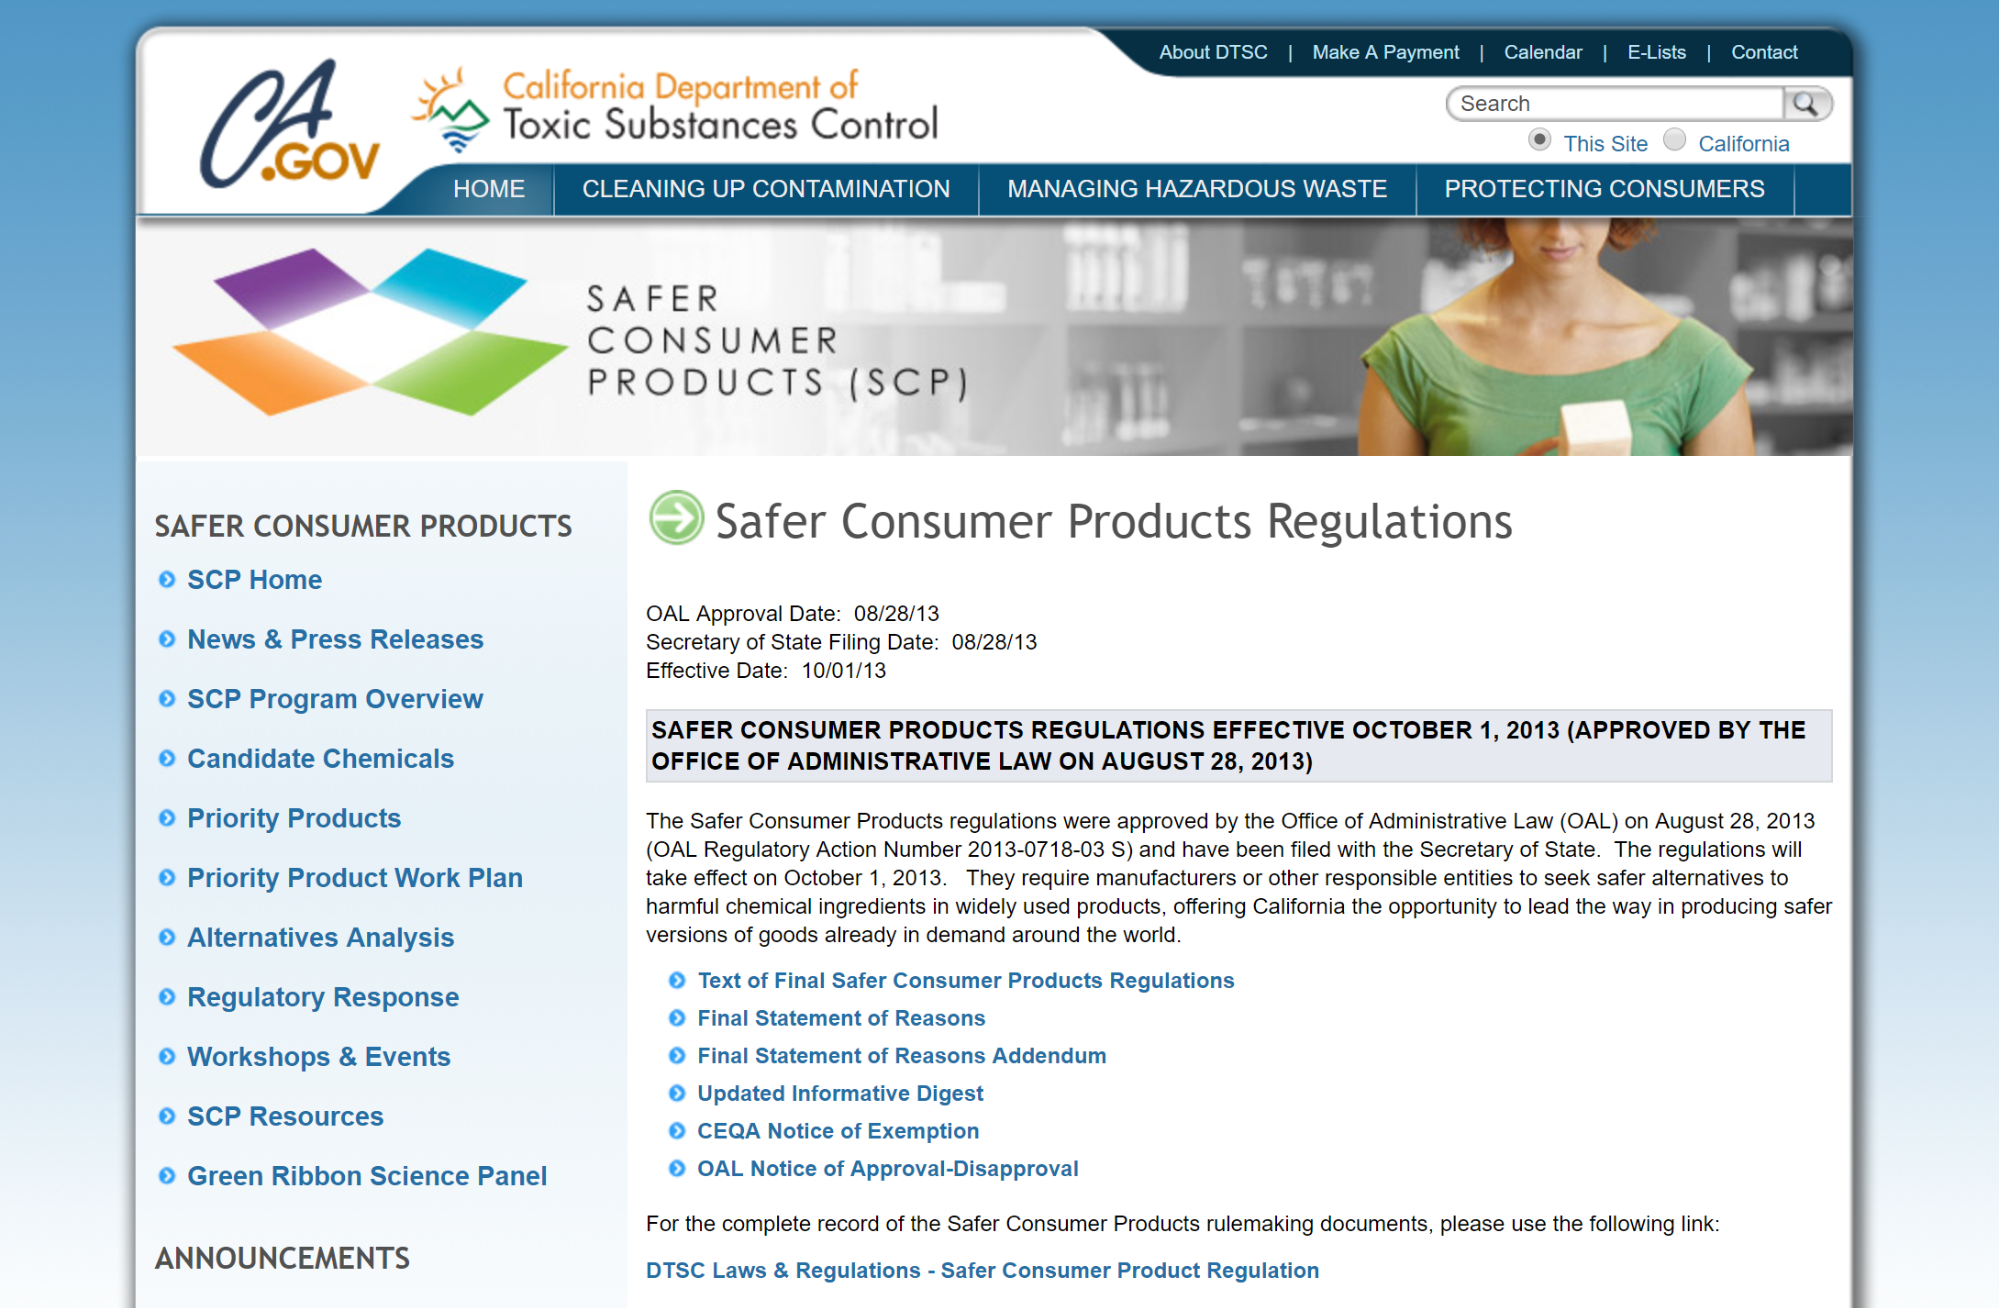 Screenshot showing consumer regulations for California